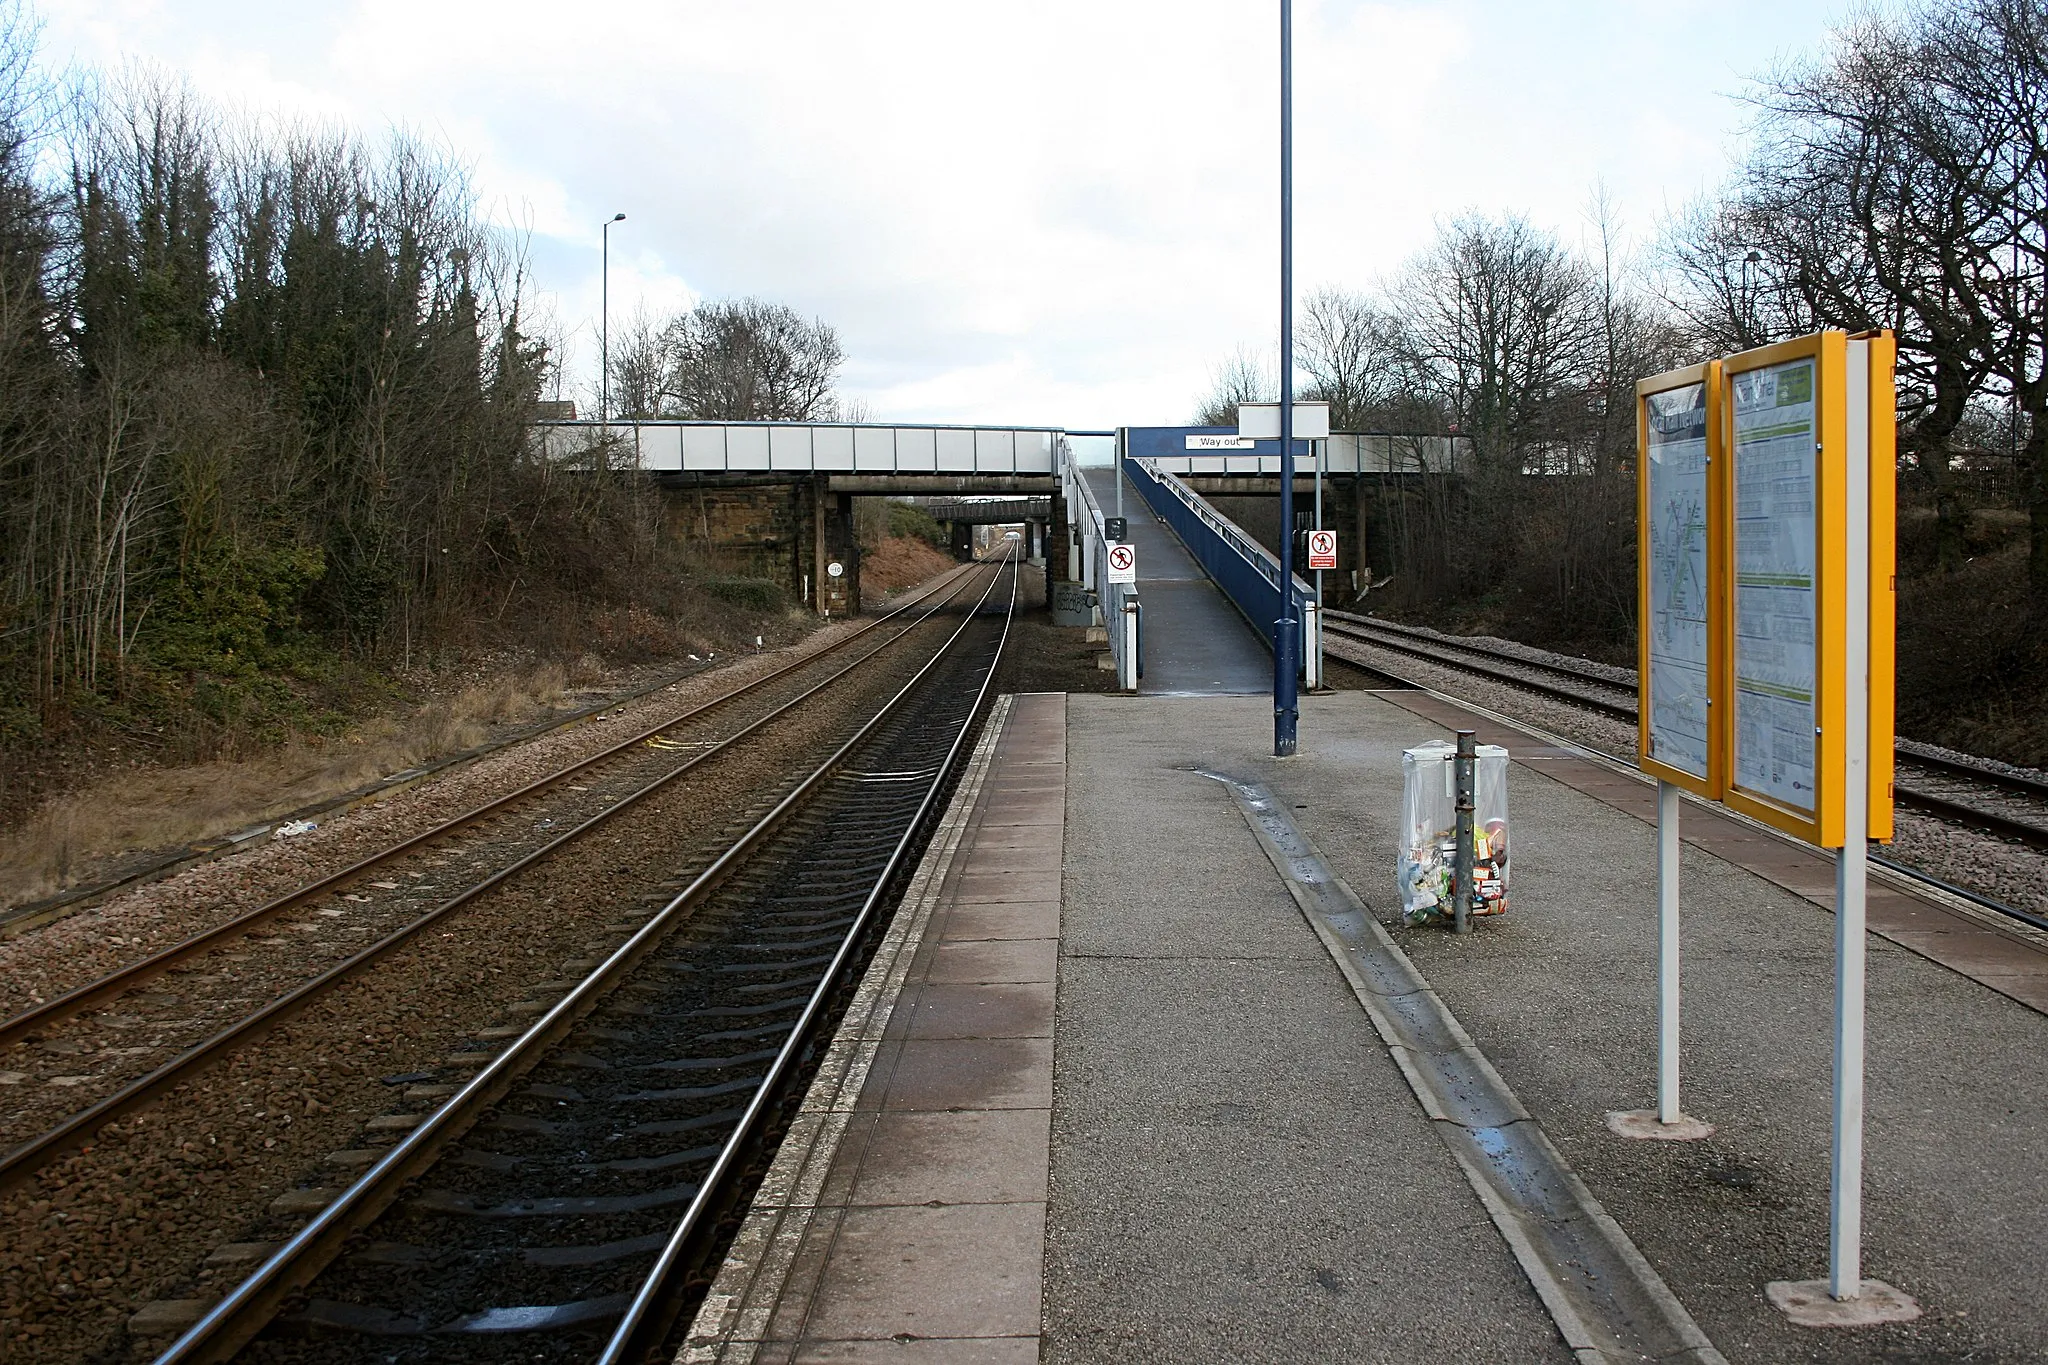 Photo showing: Kirk Sandall railway station